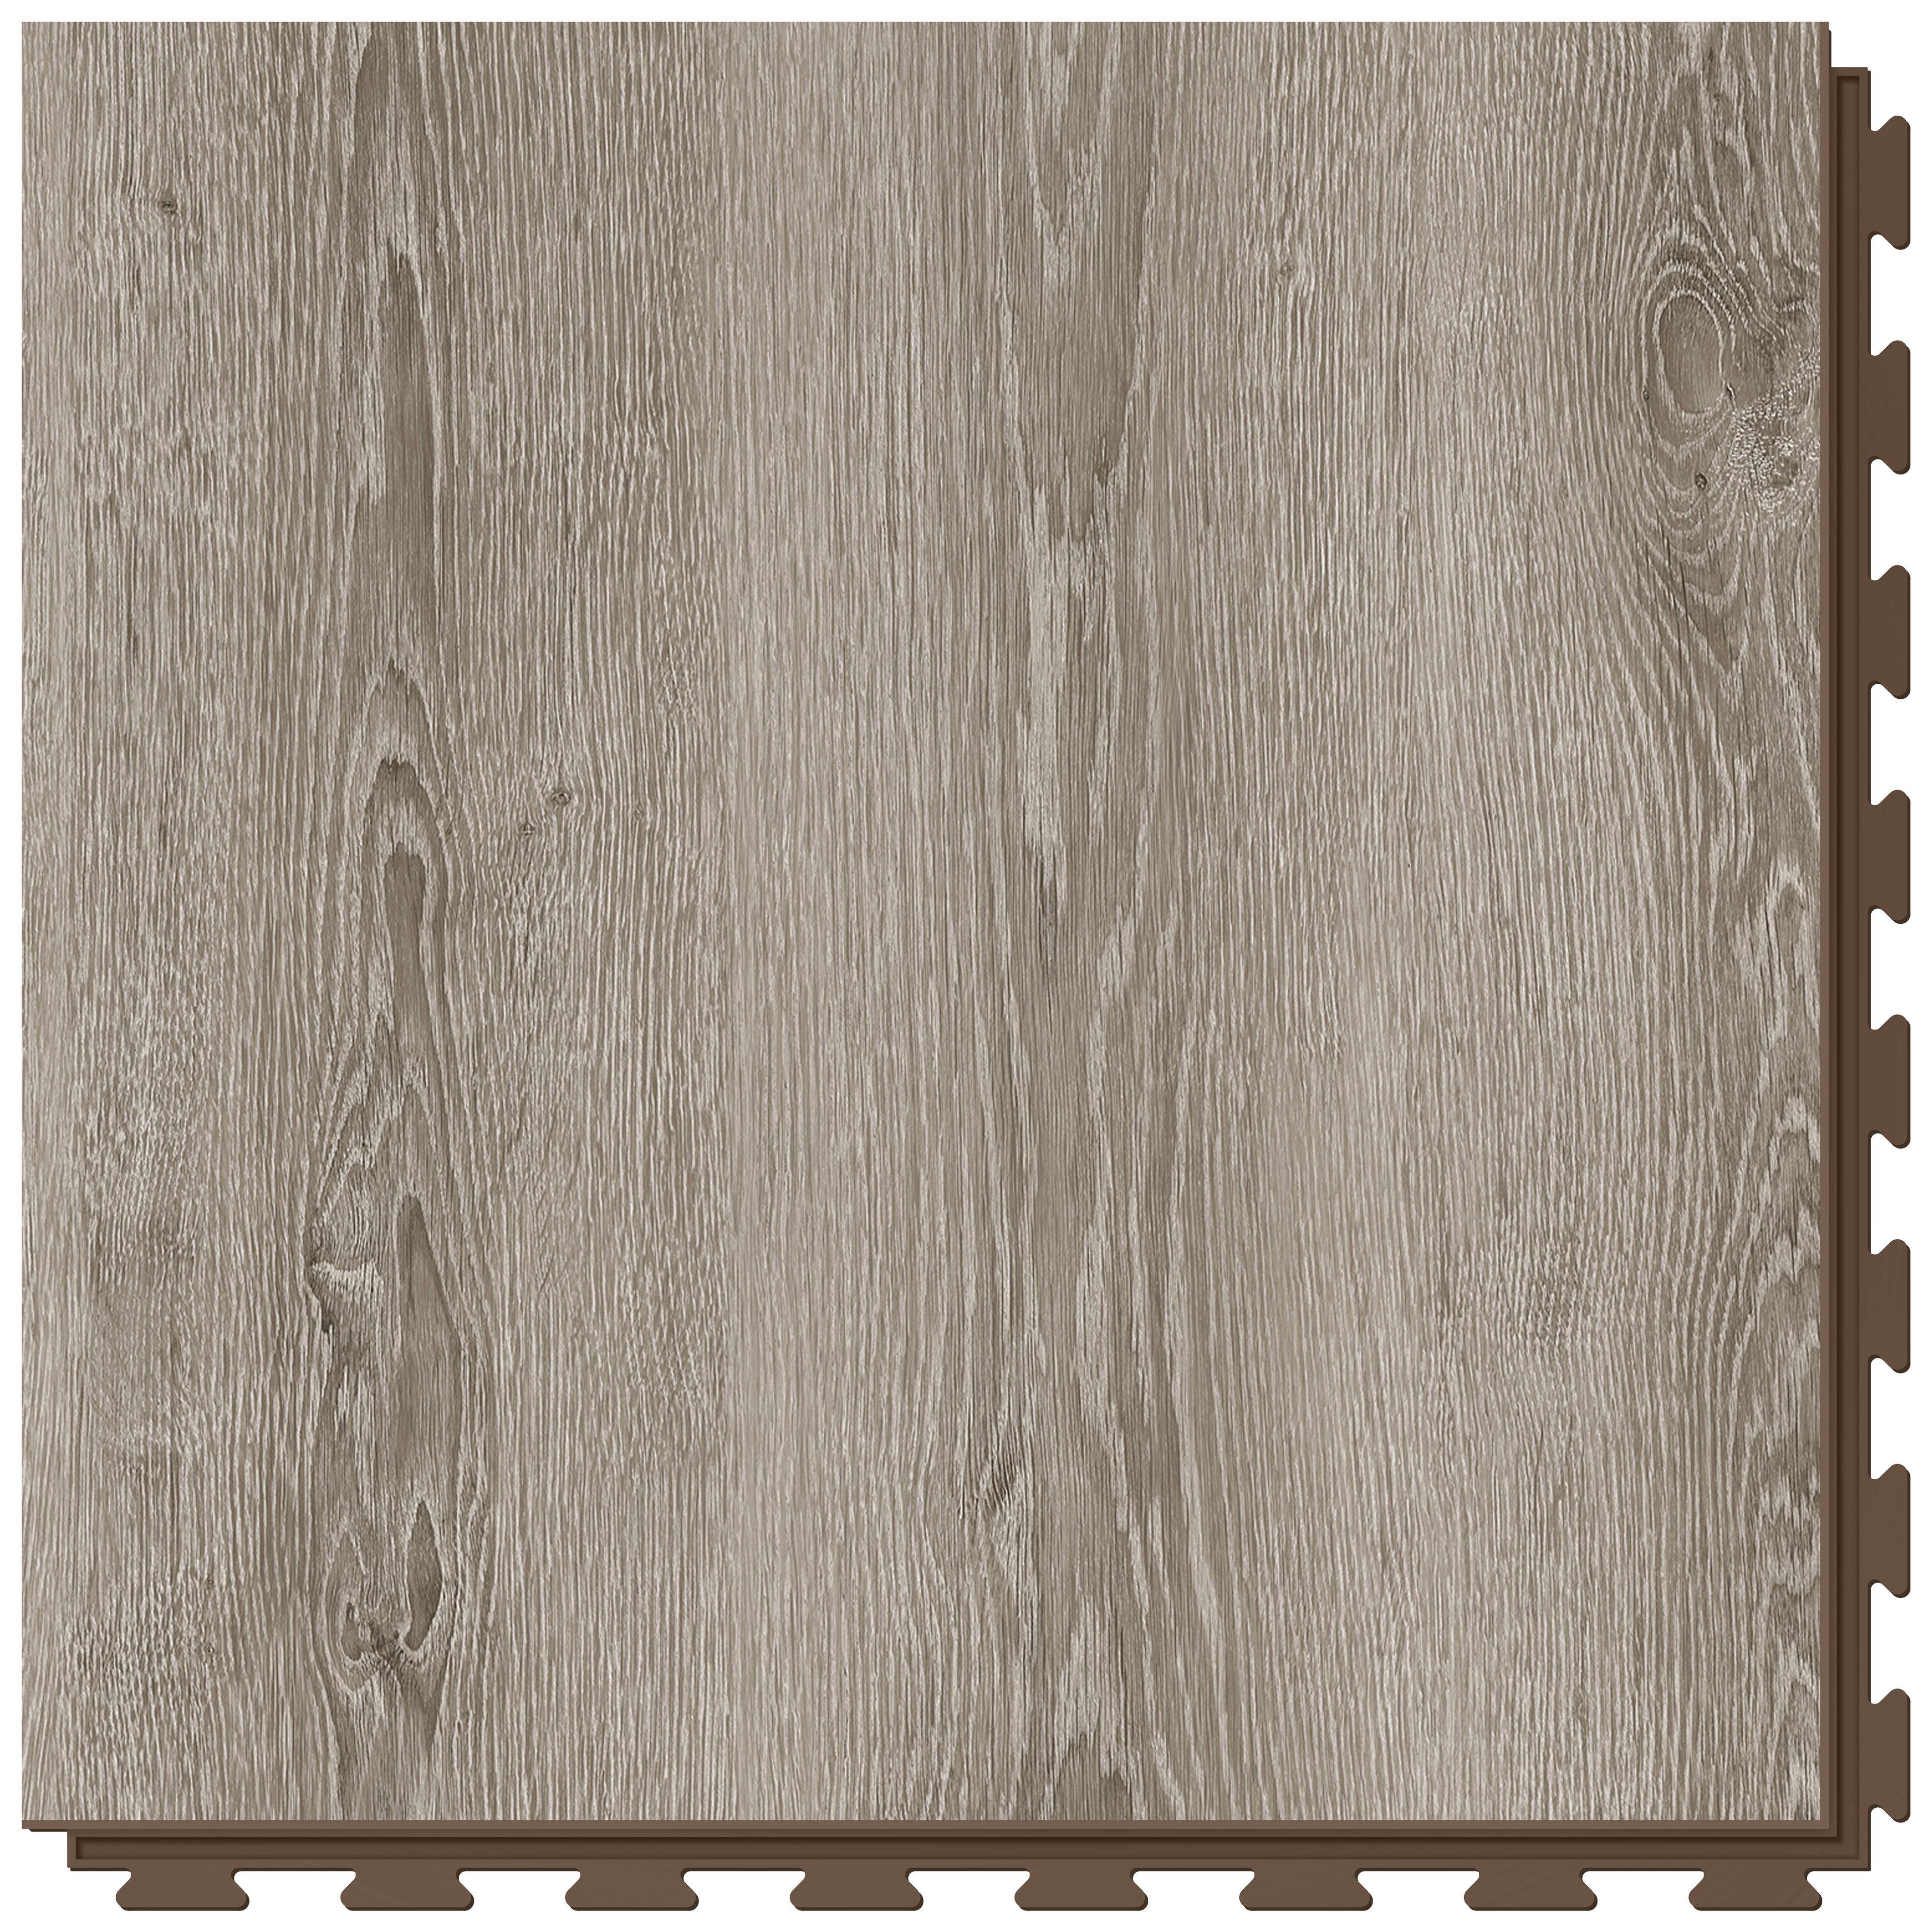 Sivá PVC vinylová dlažba Fortelock Business Scandinavian Oak W002 Brown - dĺžka 66,8 cm, šírka 66,8 cm, výška 0,7 cm